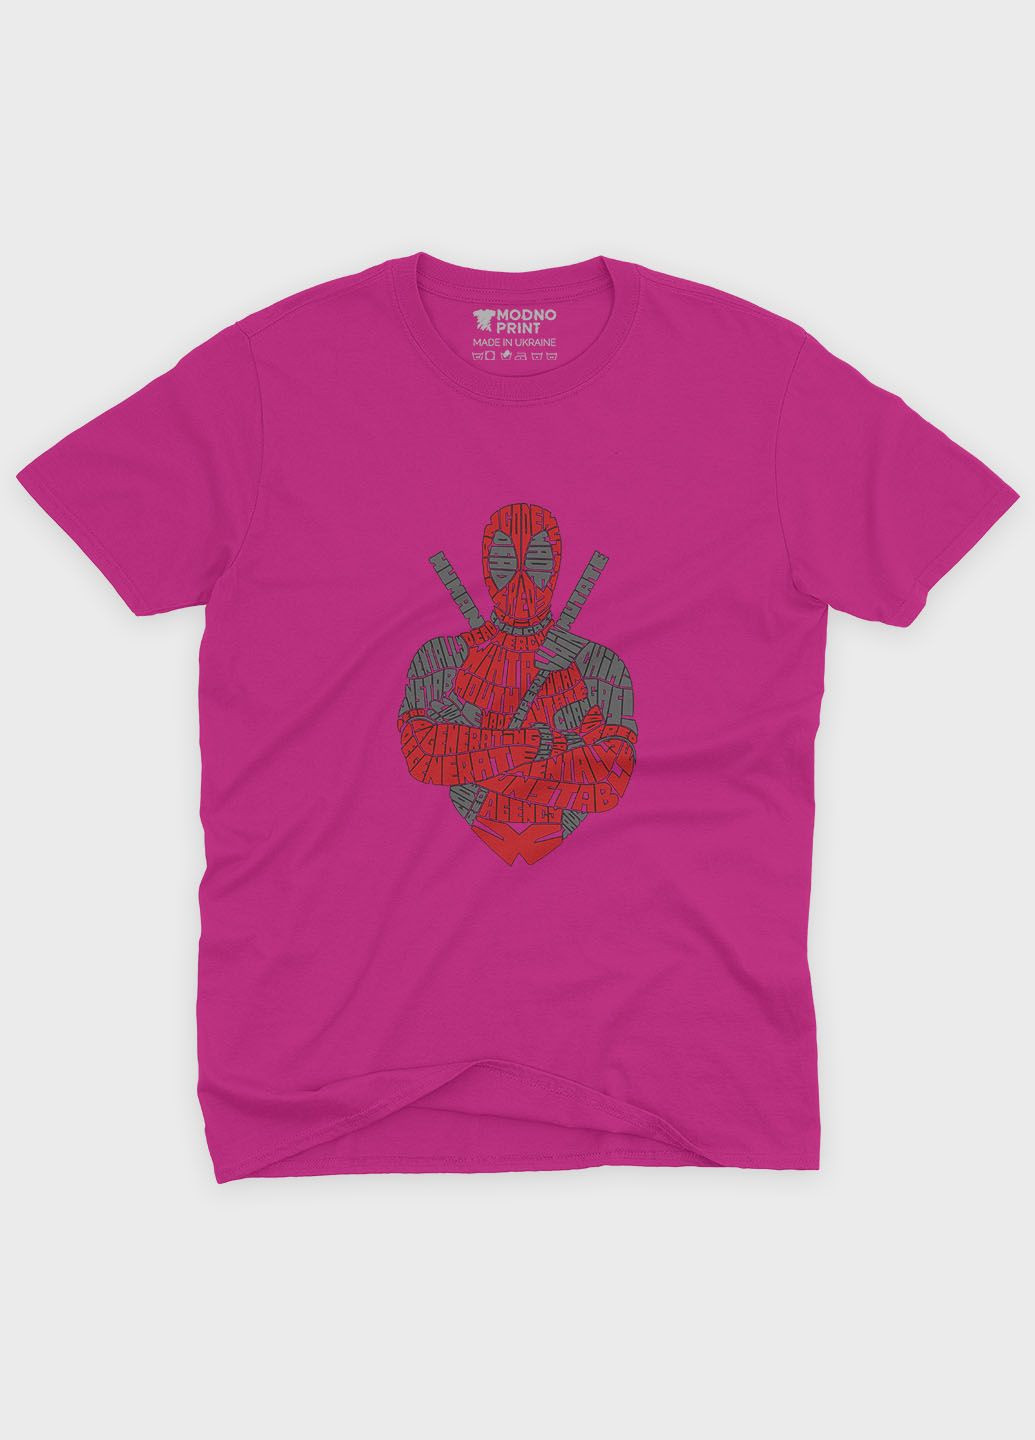 Розовая демисезонная футболка для девочки с принтом антигероя - дедпул (ts001-1-fuxj-006-015-001-g) Modno